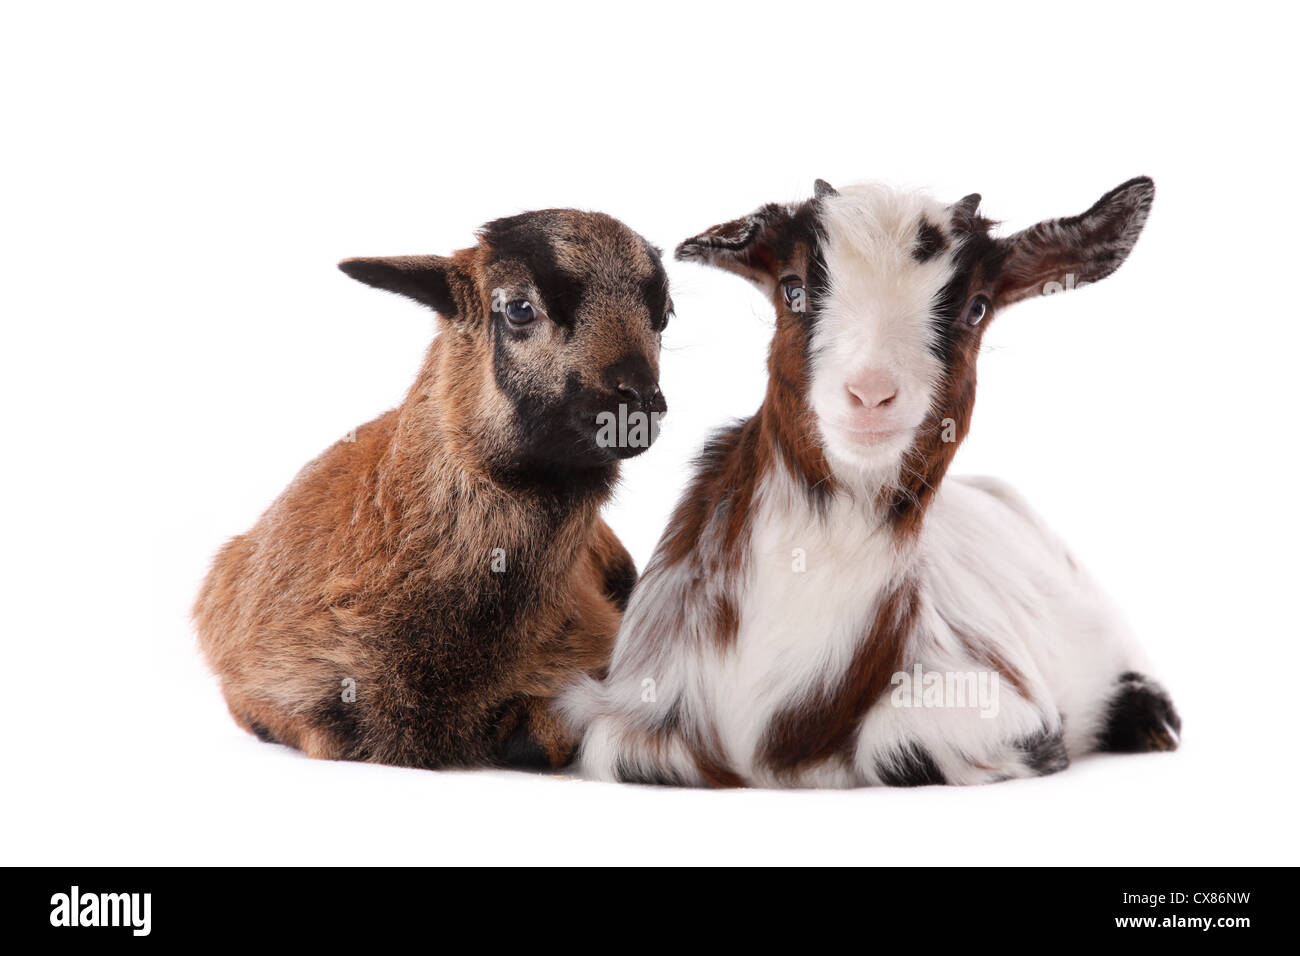 yeanling goat and yeanling lamb Stock Photo